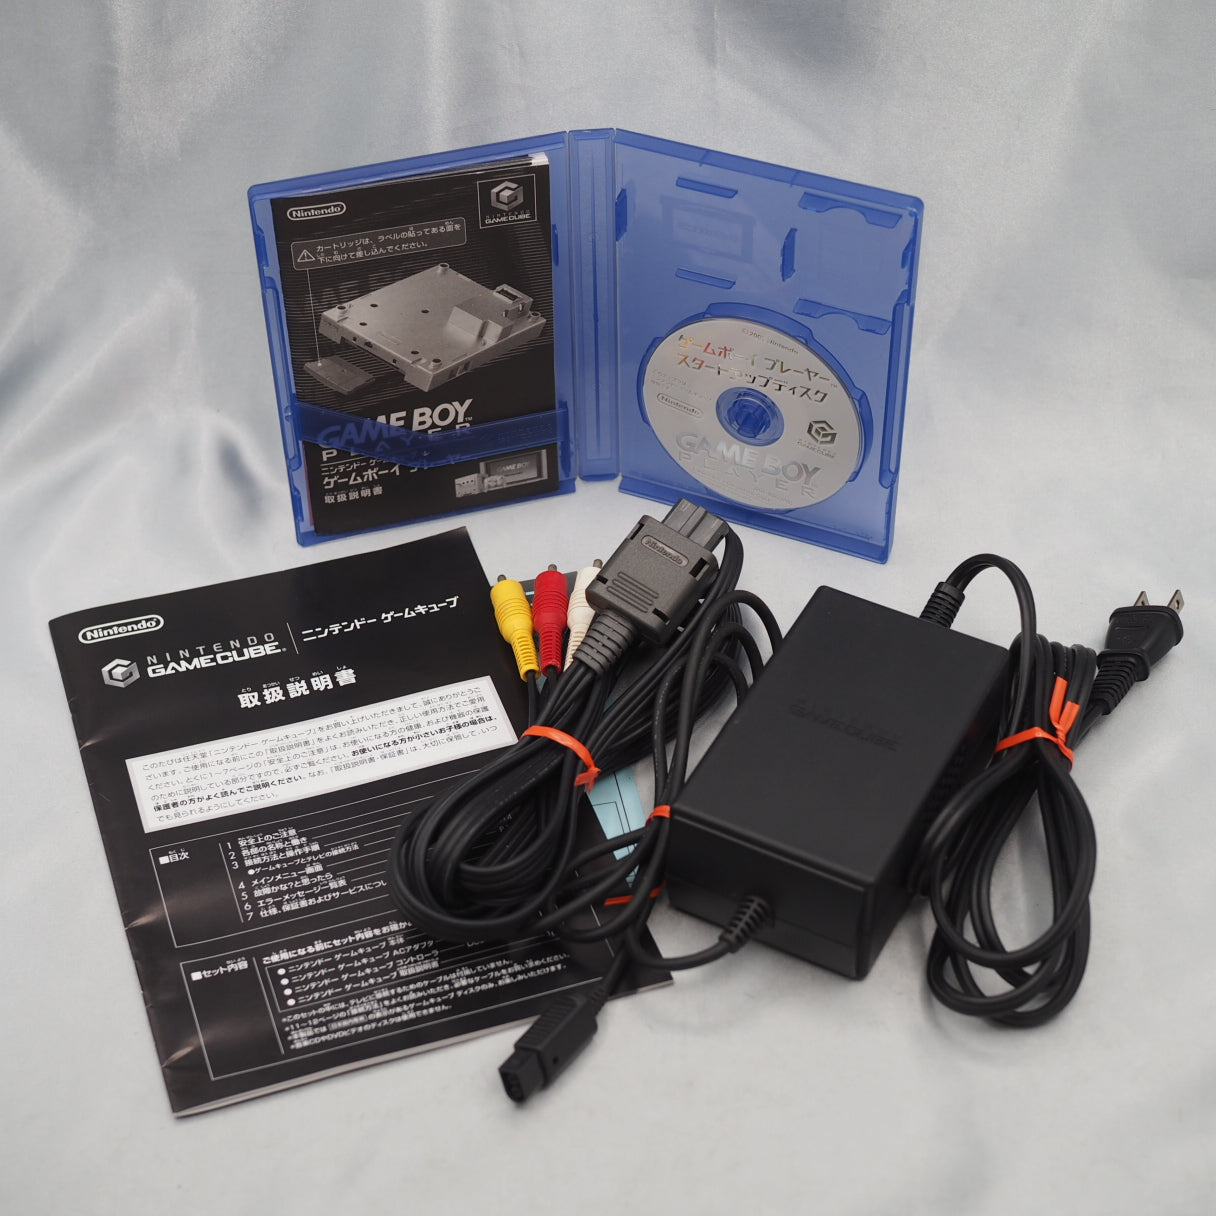 Nintendo GameCube Console System Orange  DOL-001 + Game Boy Player [modified]